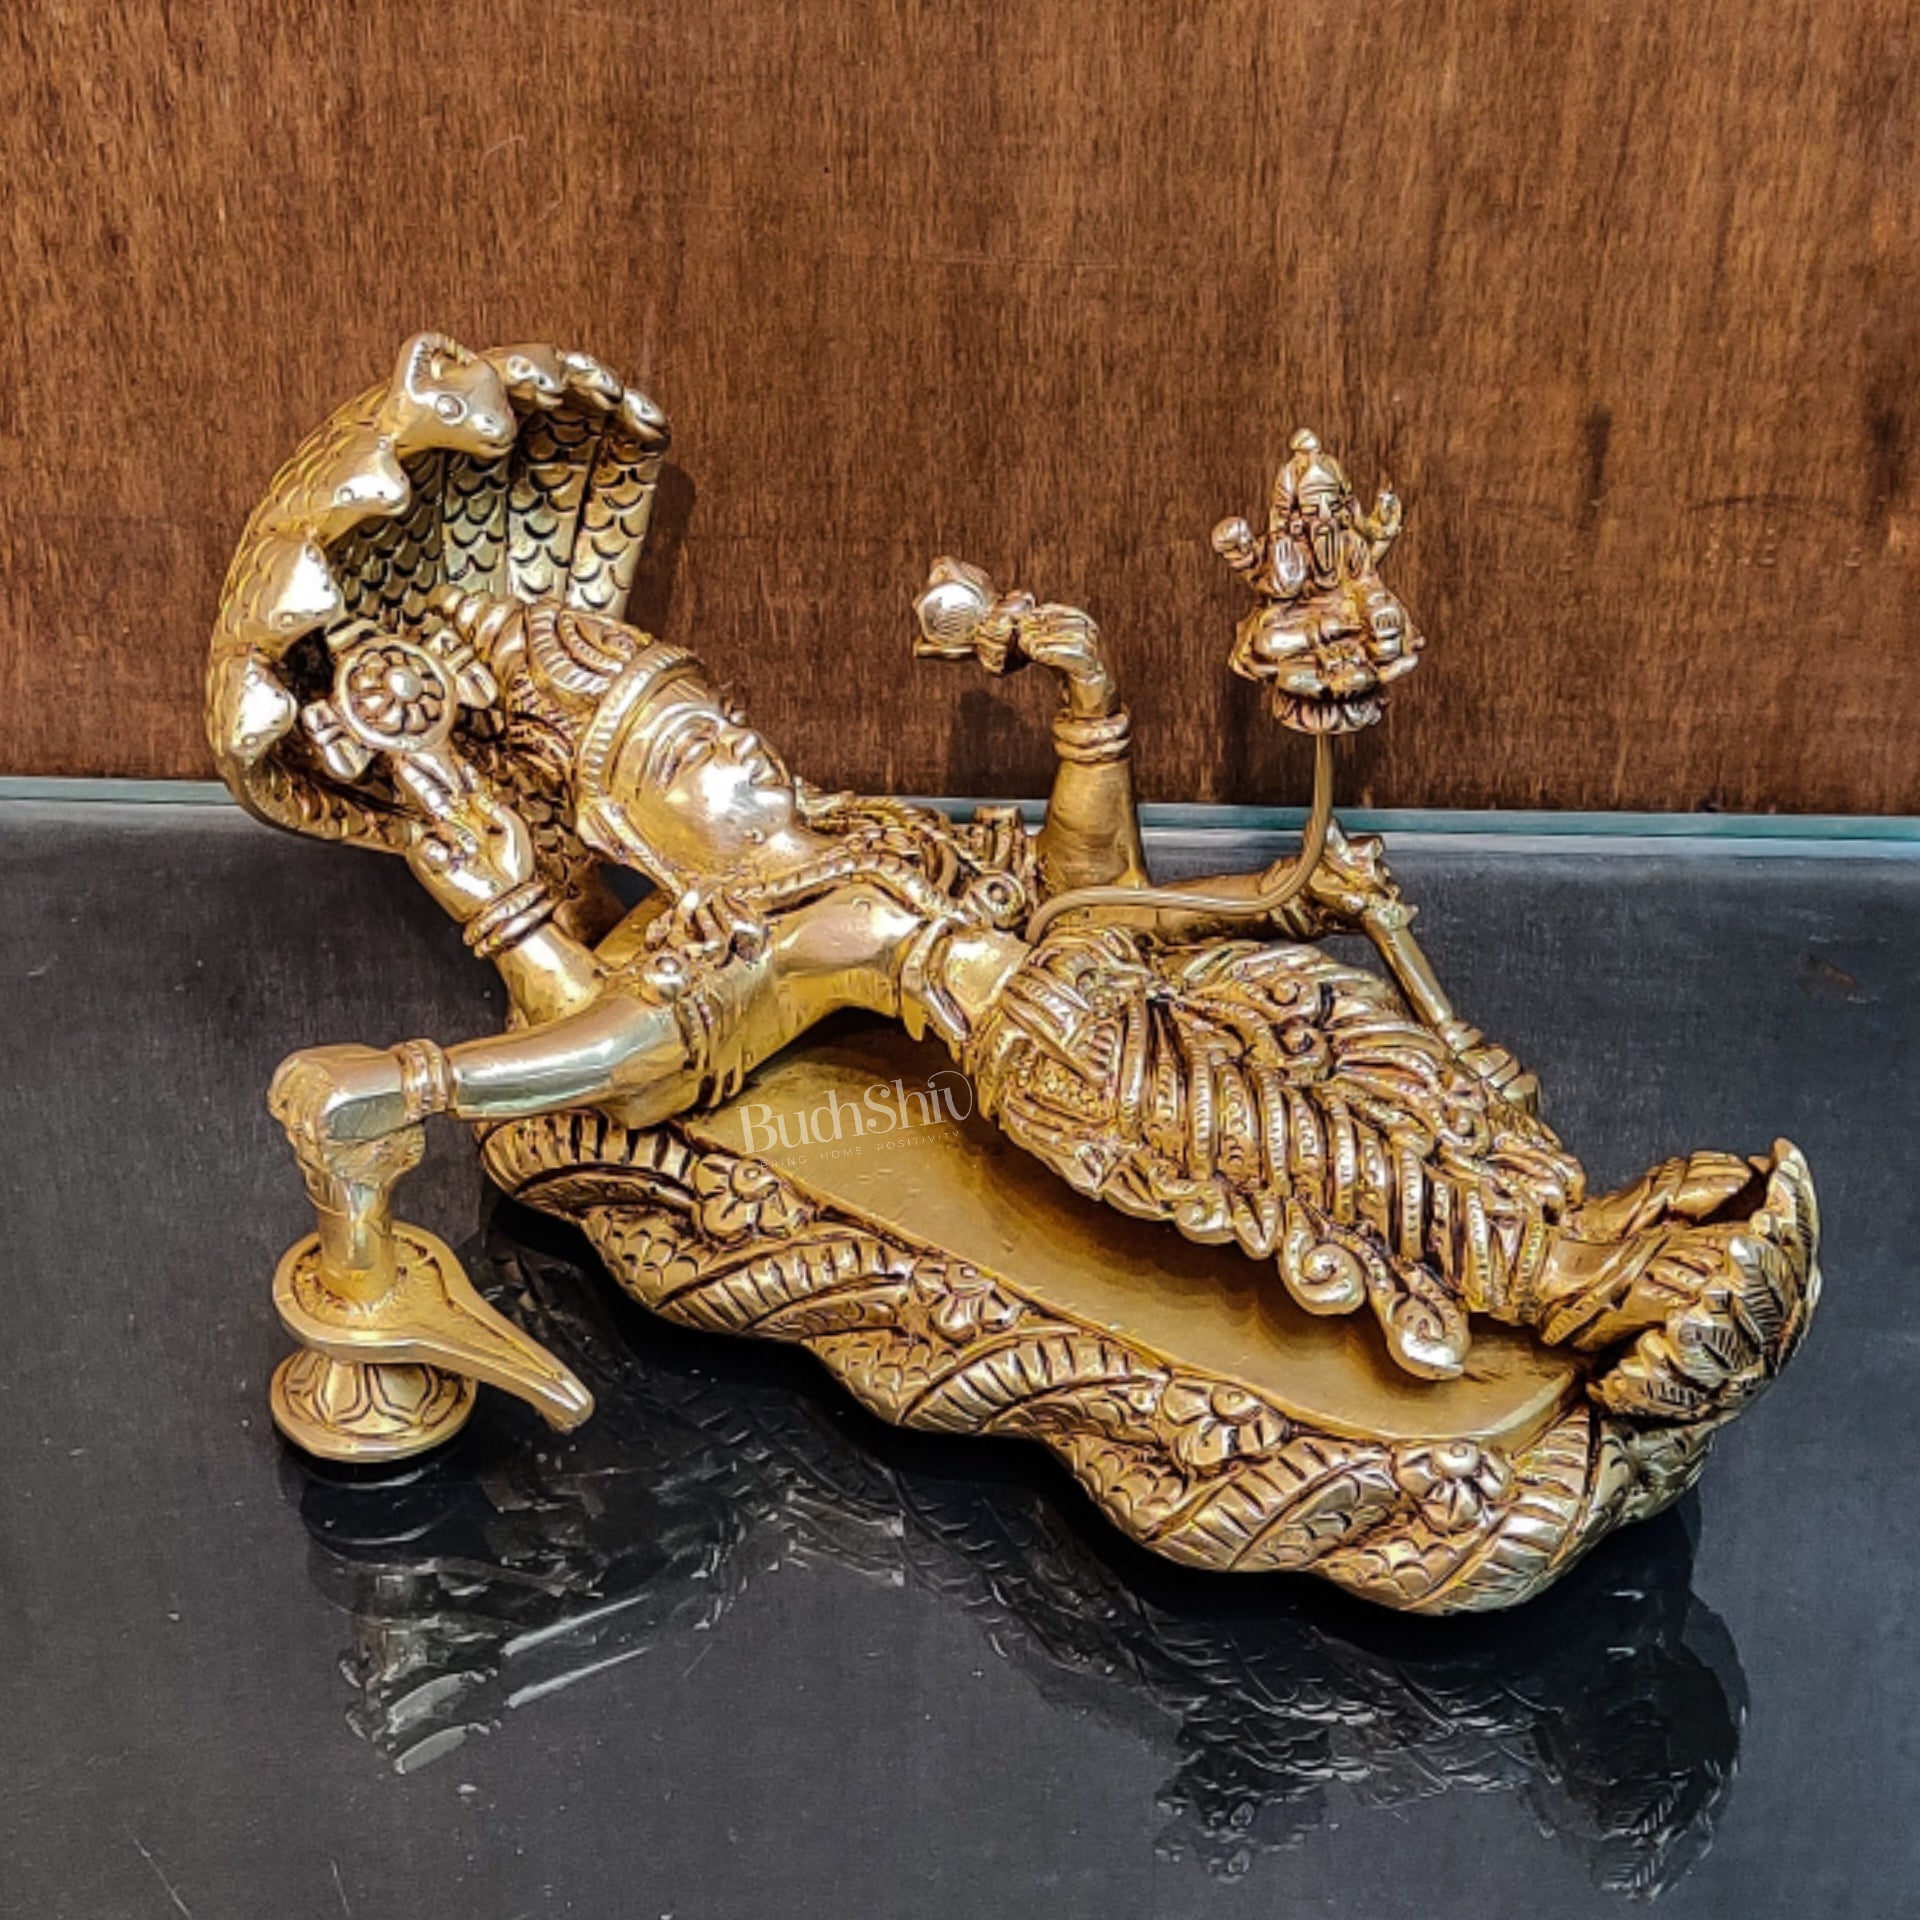 Shesh Shaiya Vishnu stock image. Image of rich, idol - 229839737